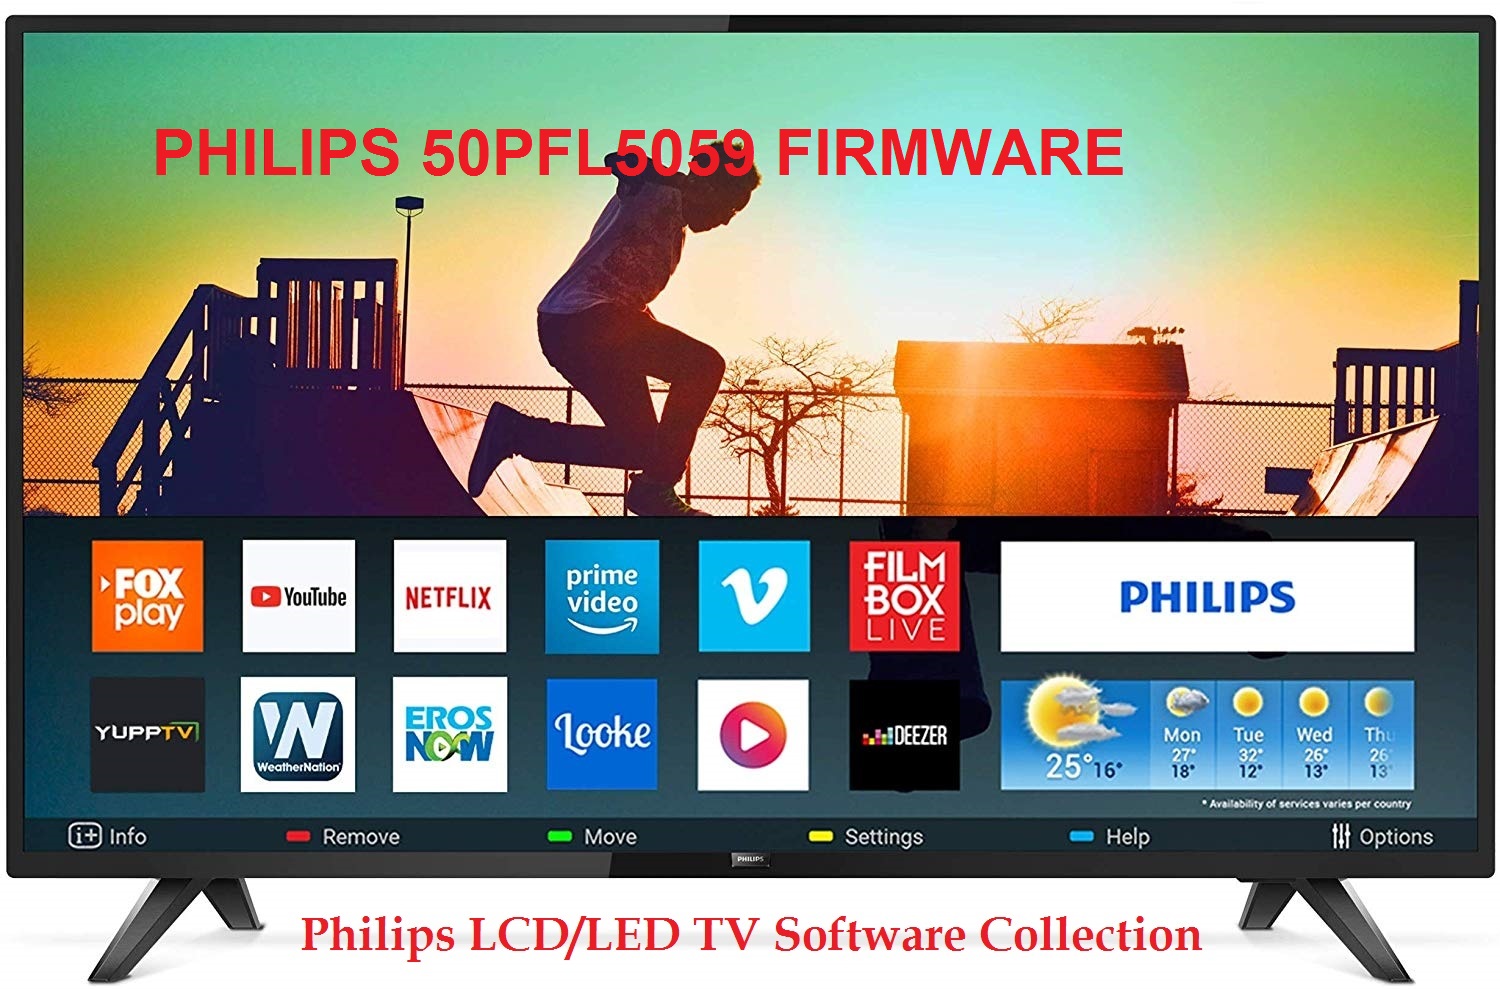 Philips 50Pfl5059